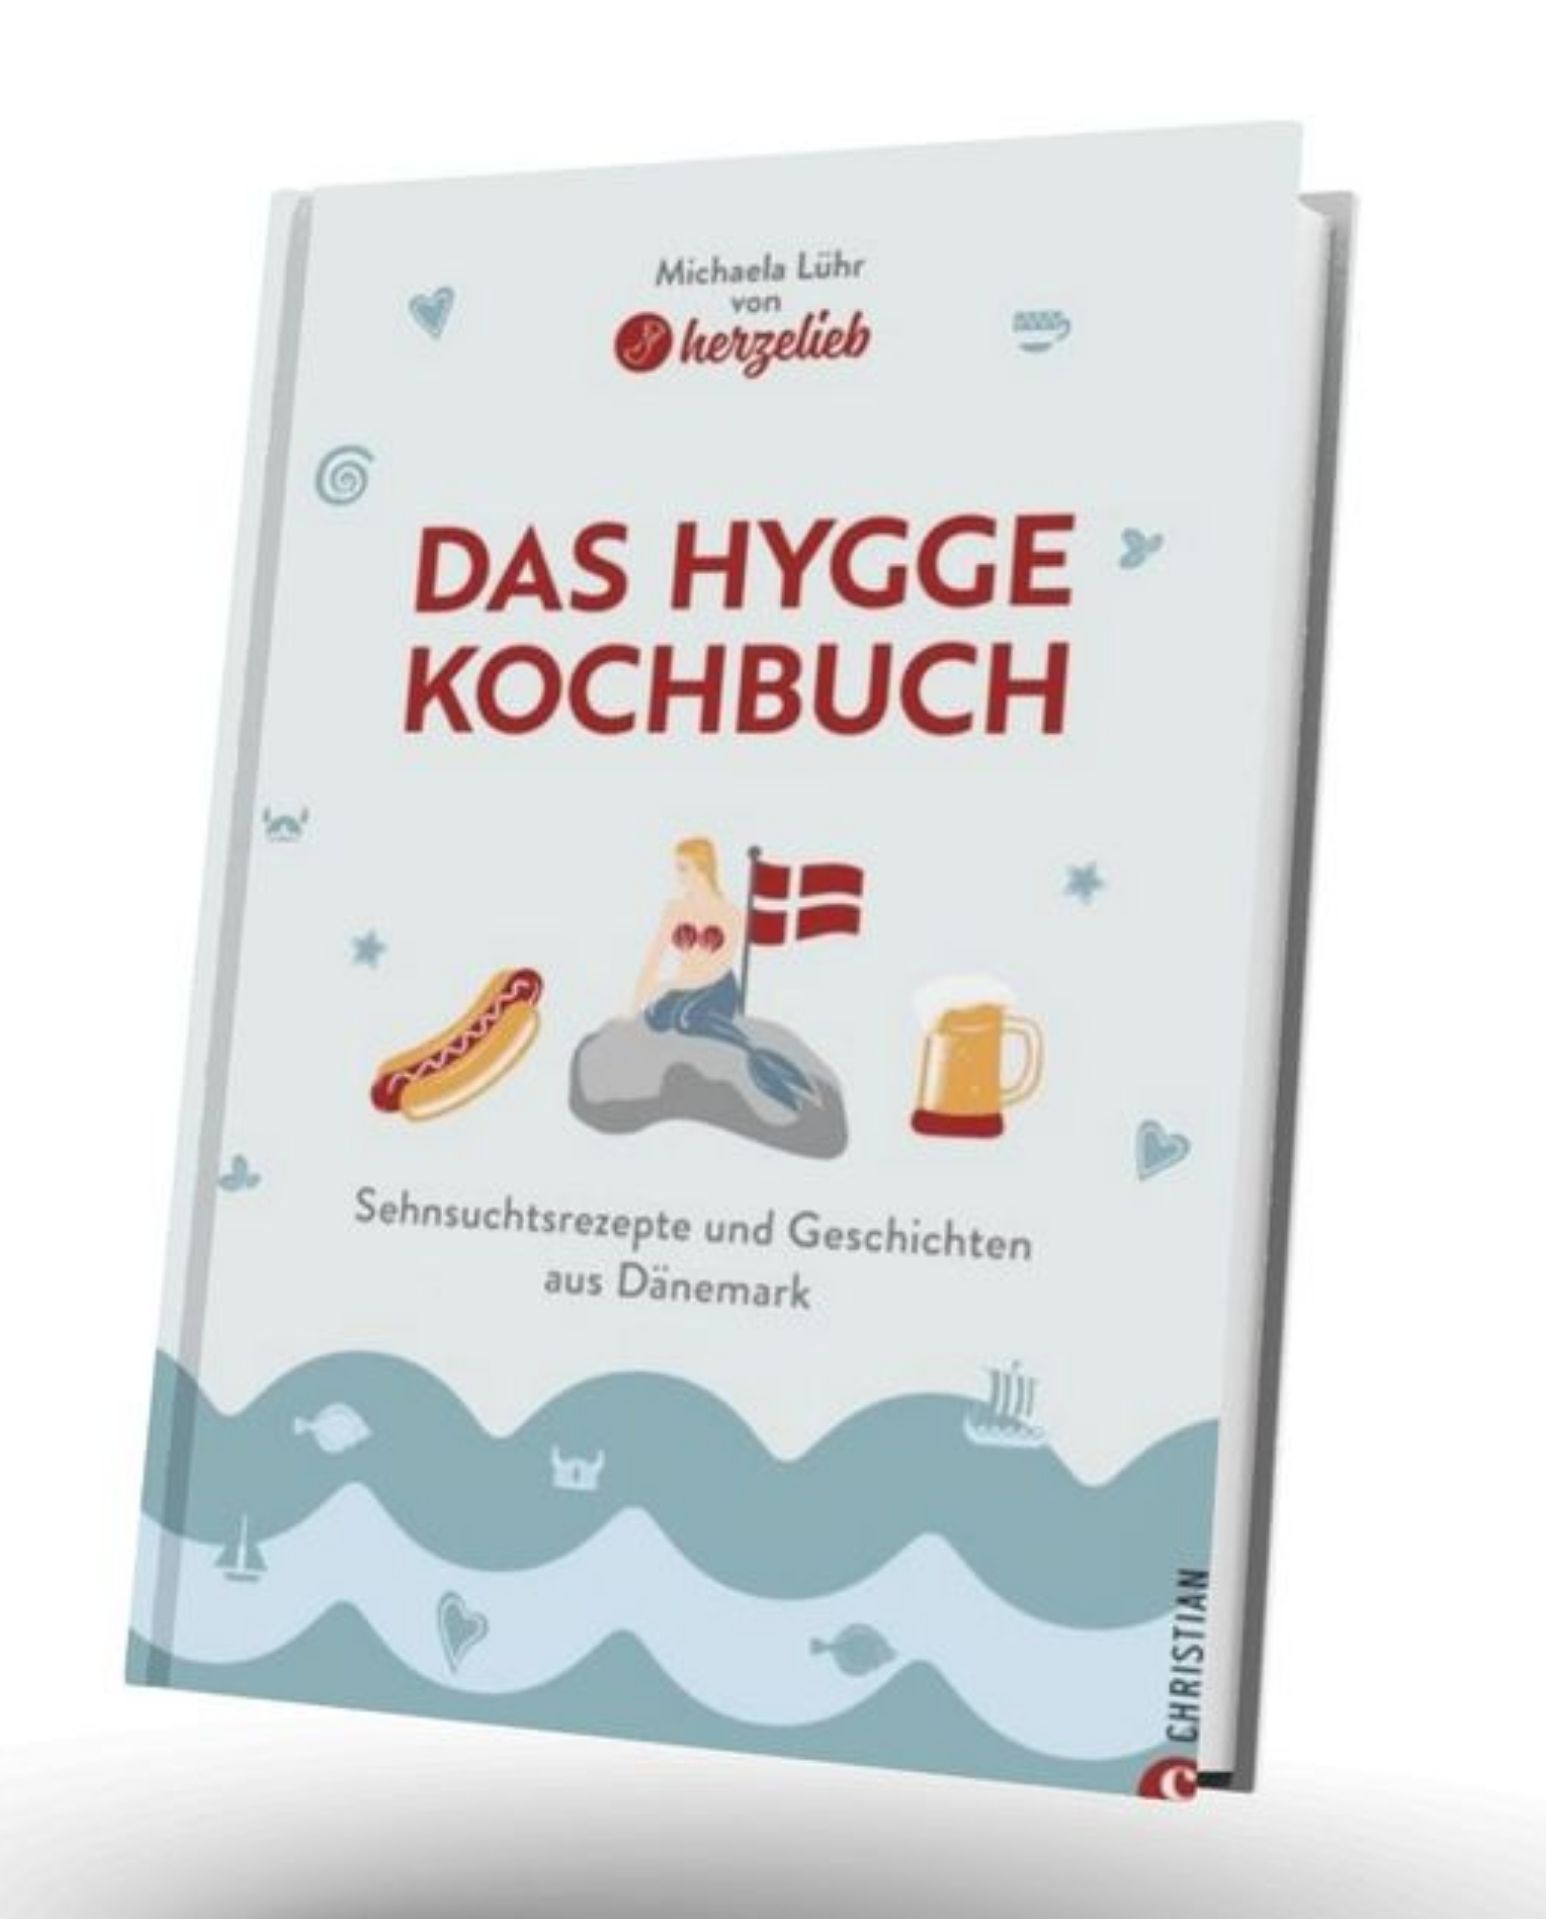 Kochbuch Das Hygge Kochbuch von Michaela Lühr